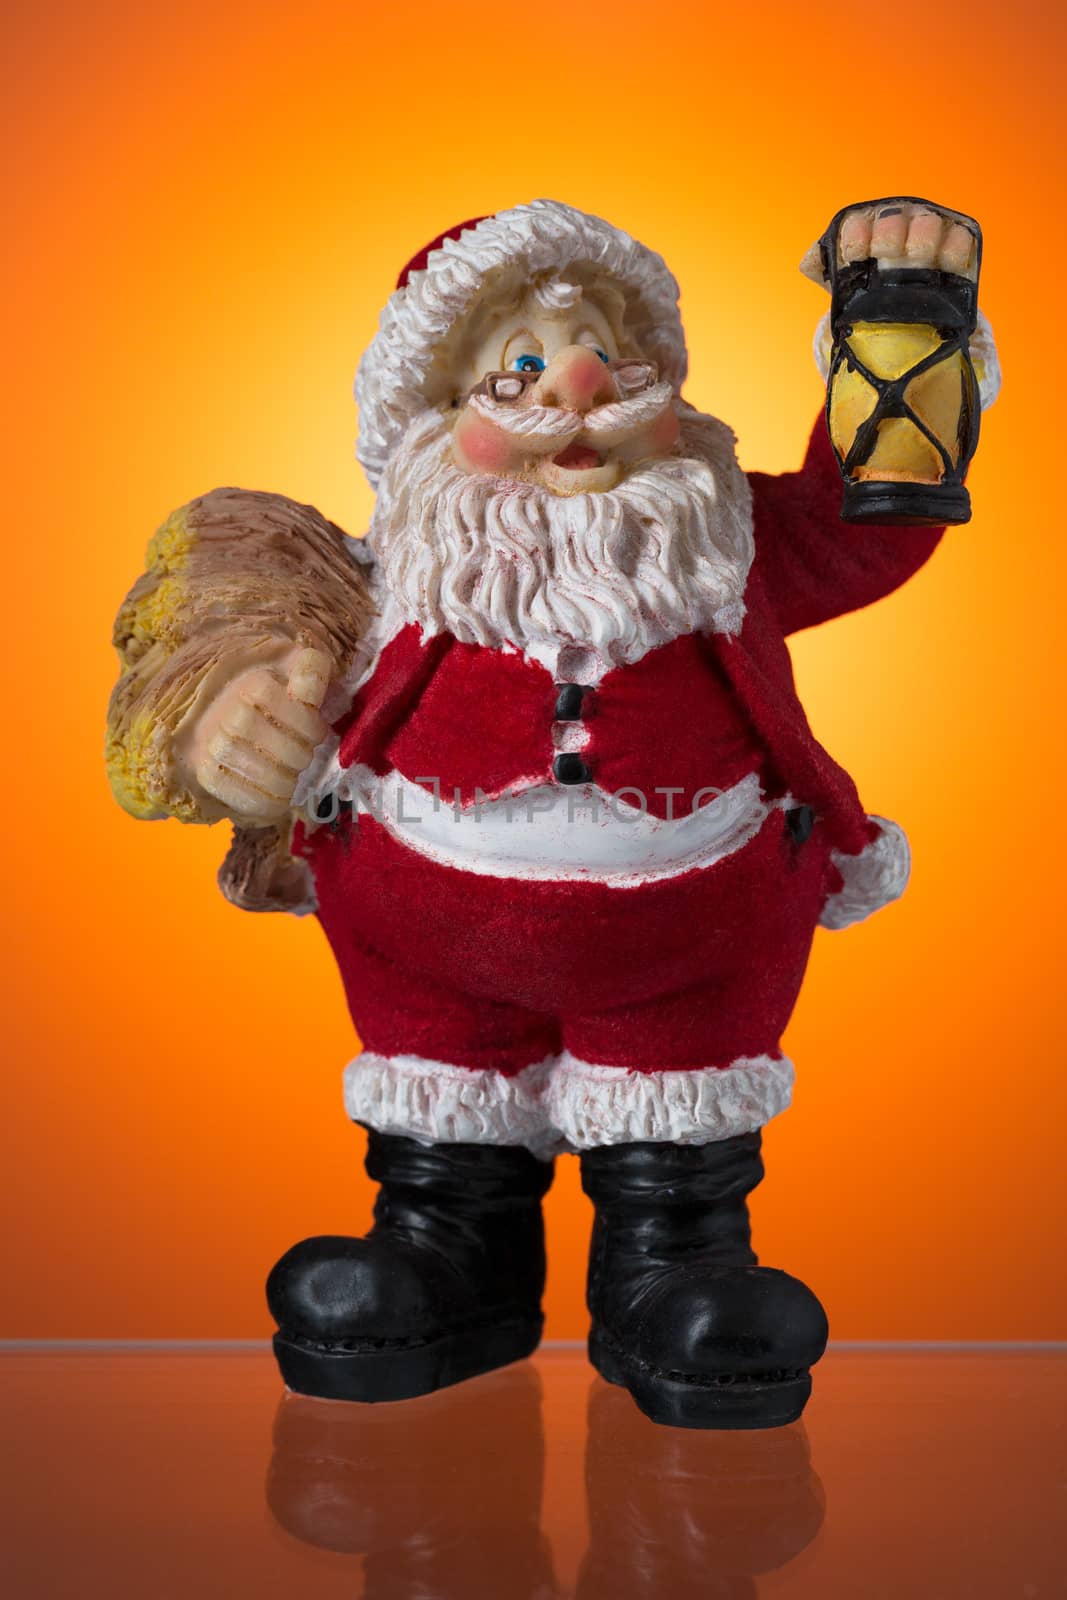 Santa Claus figure on a background of orange spots